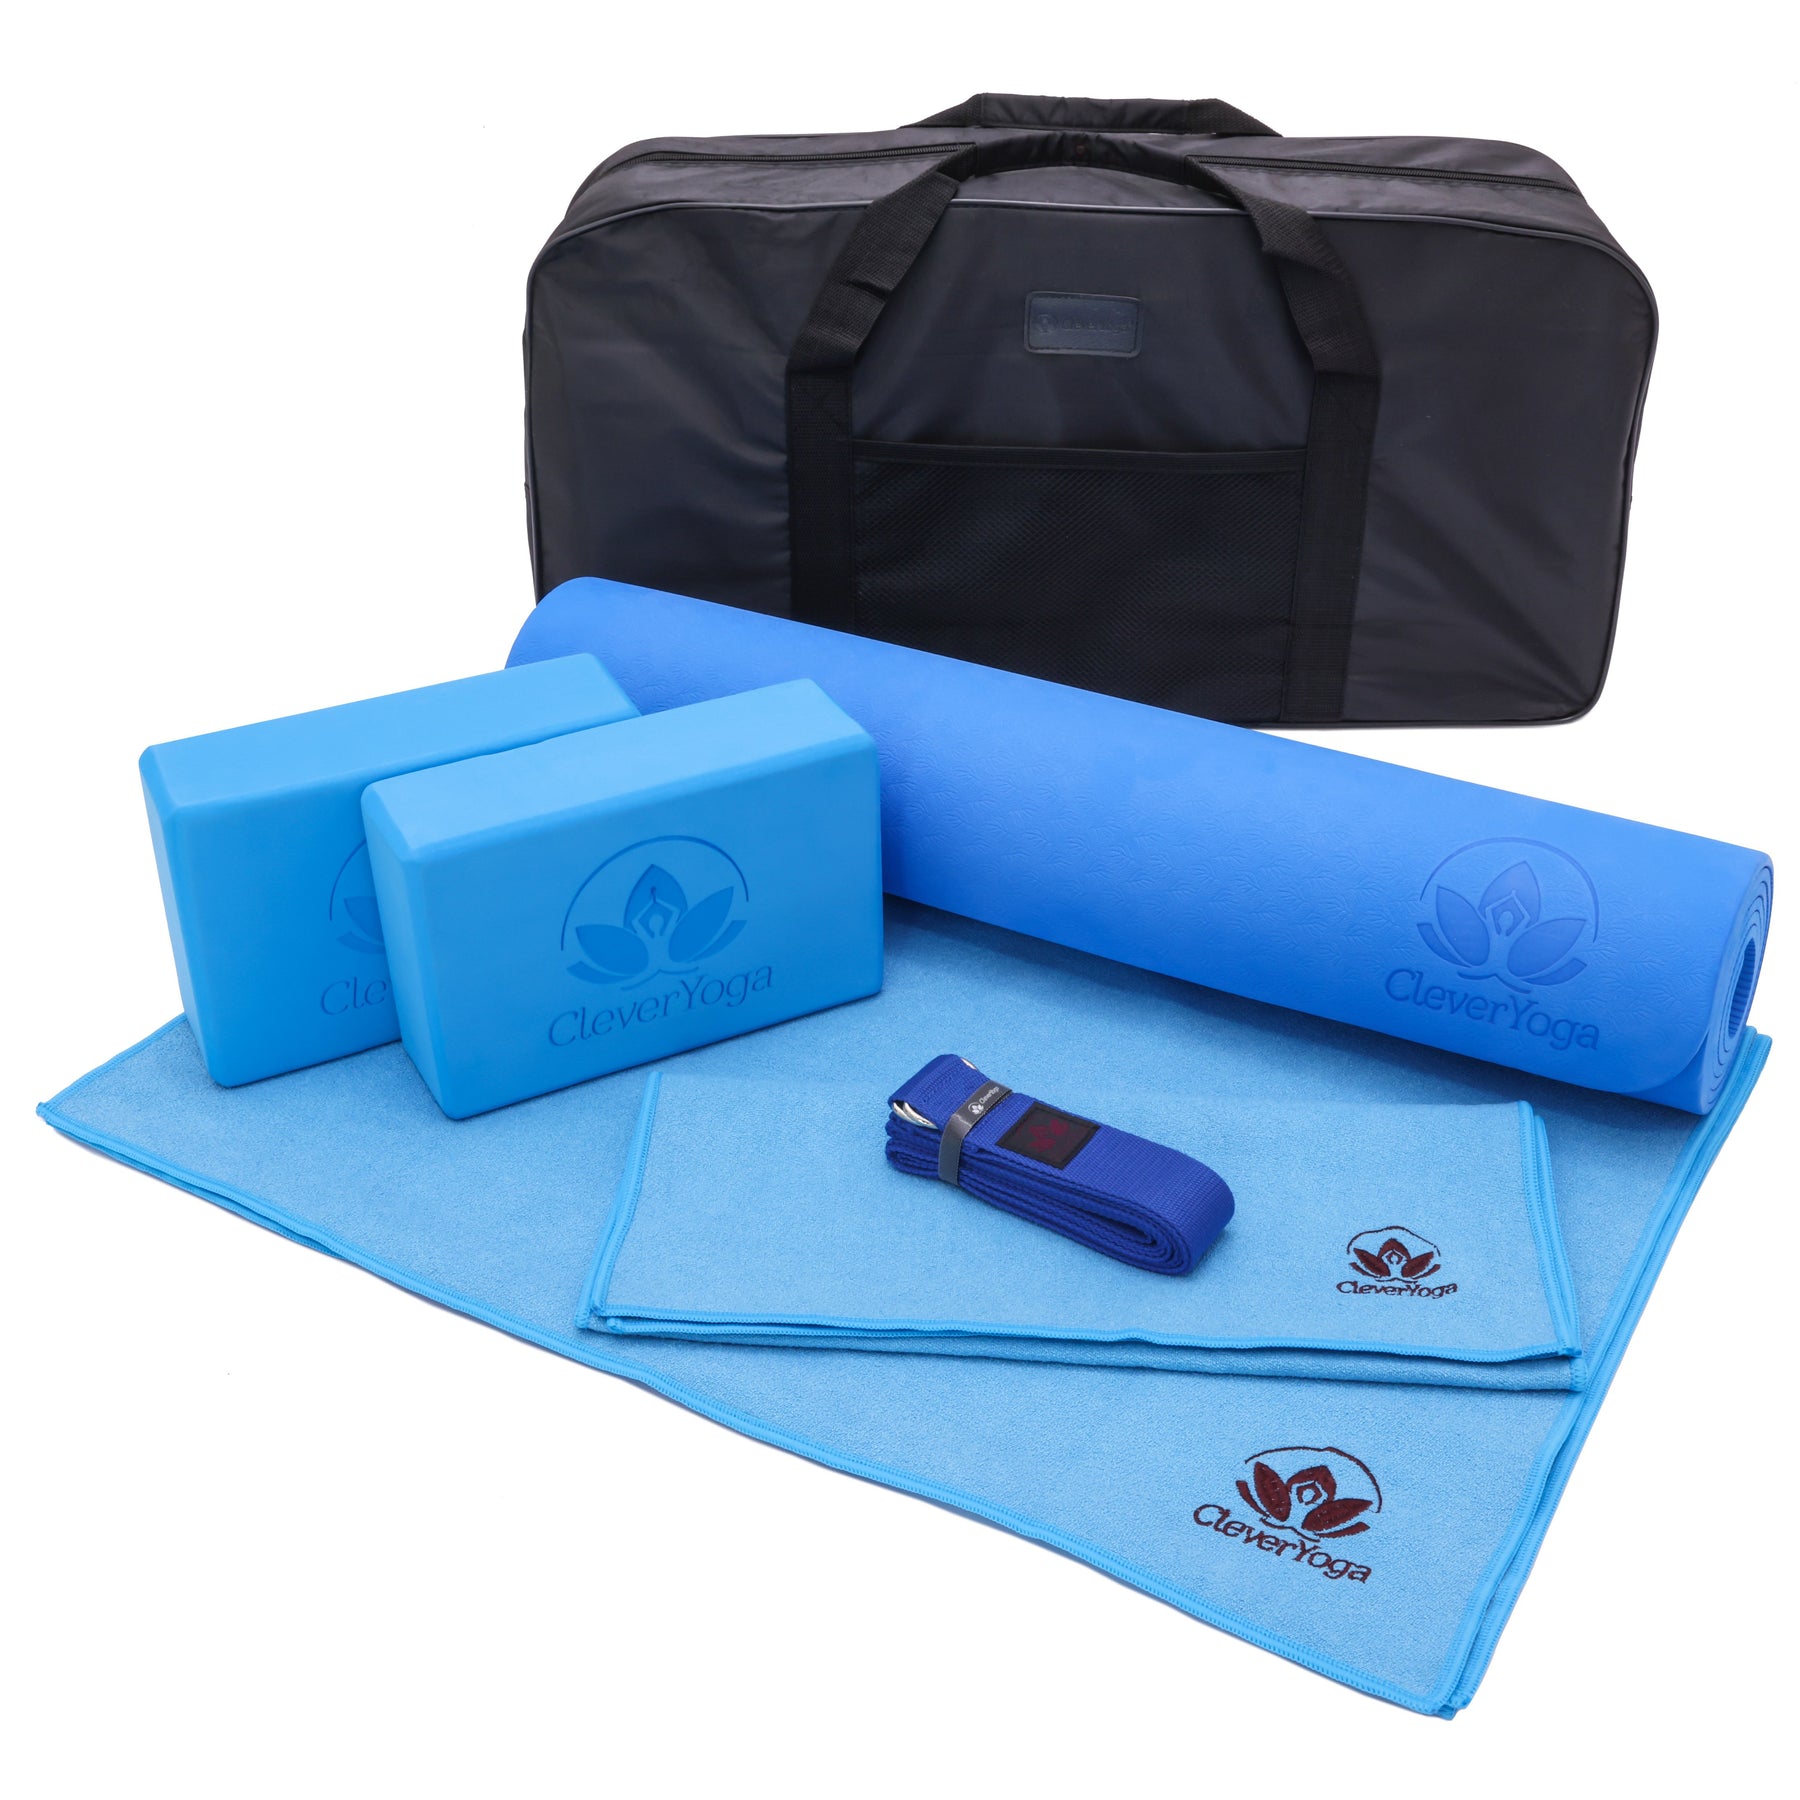 Beginners Yoga Starter Kit (Yoga Mat, Yoga Block, Yoga Strap) 3 Piece Set.